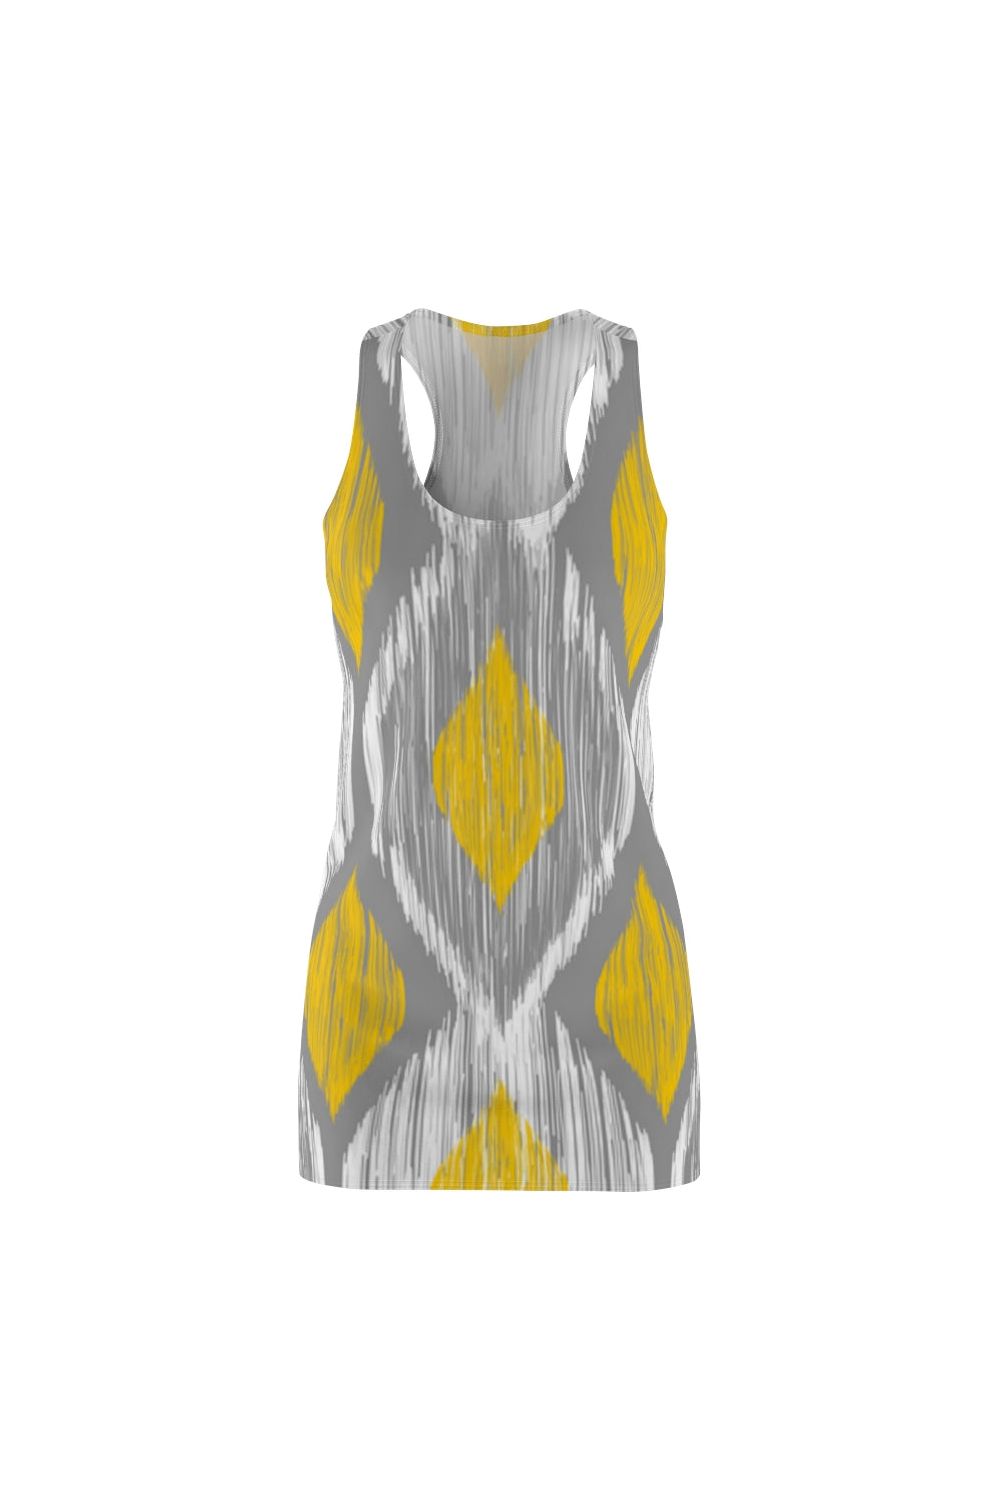 Women's Gray and Yellow Racerback Dress - NicholesGifts.online